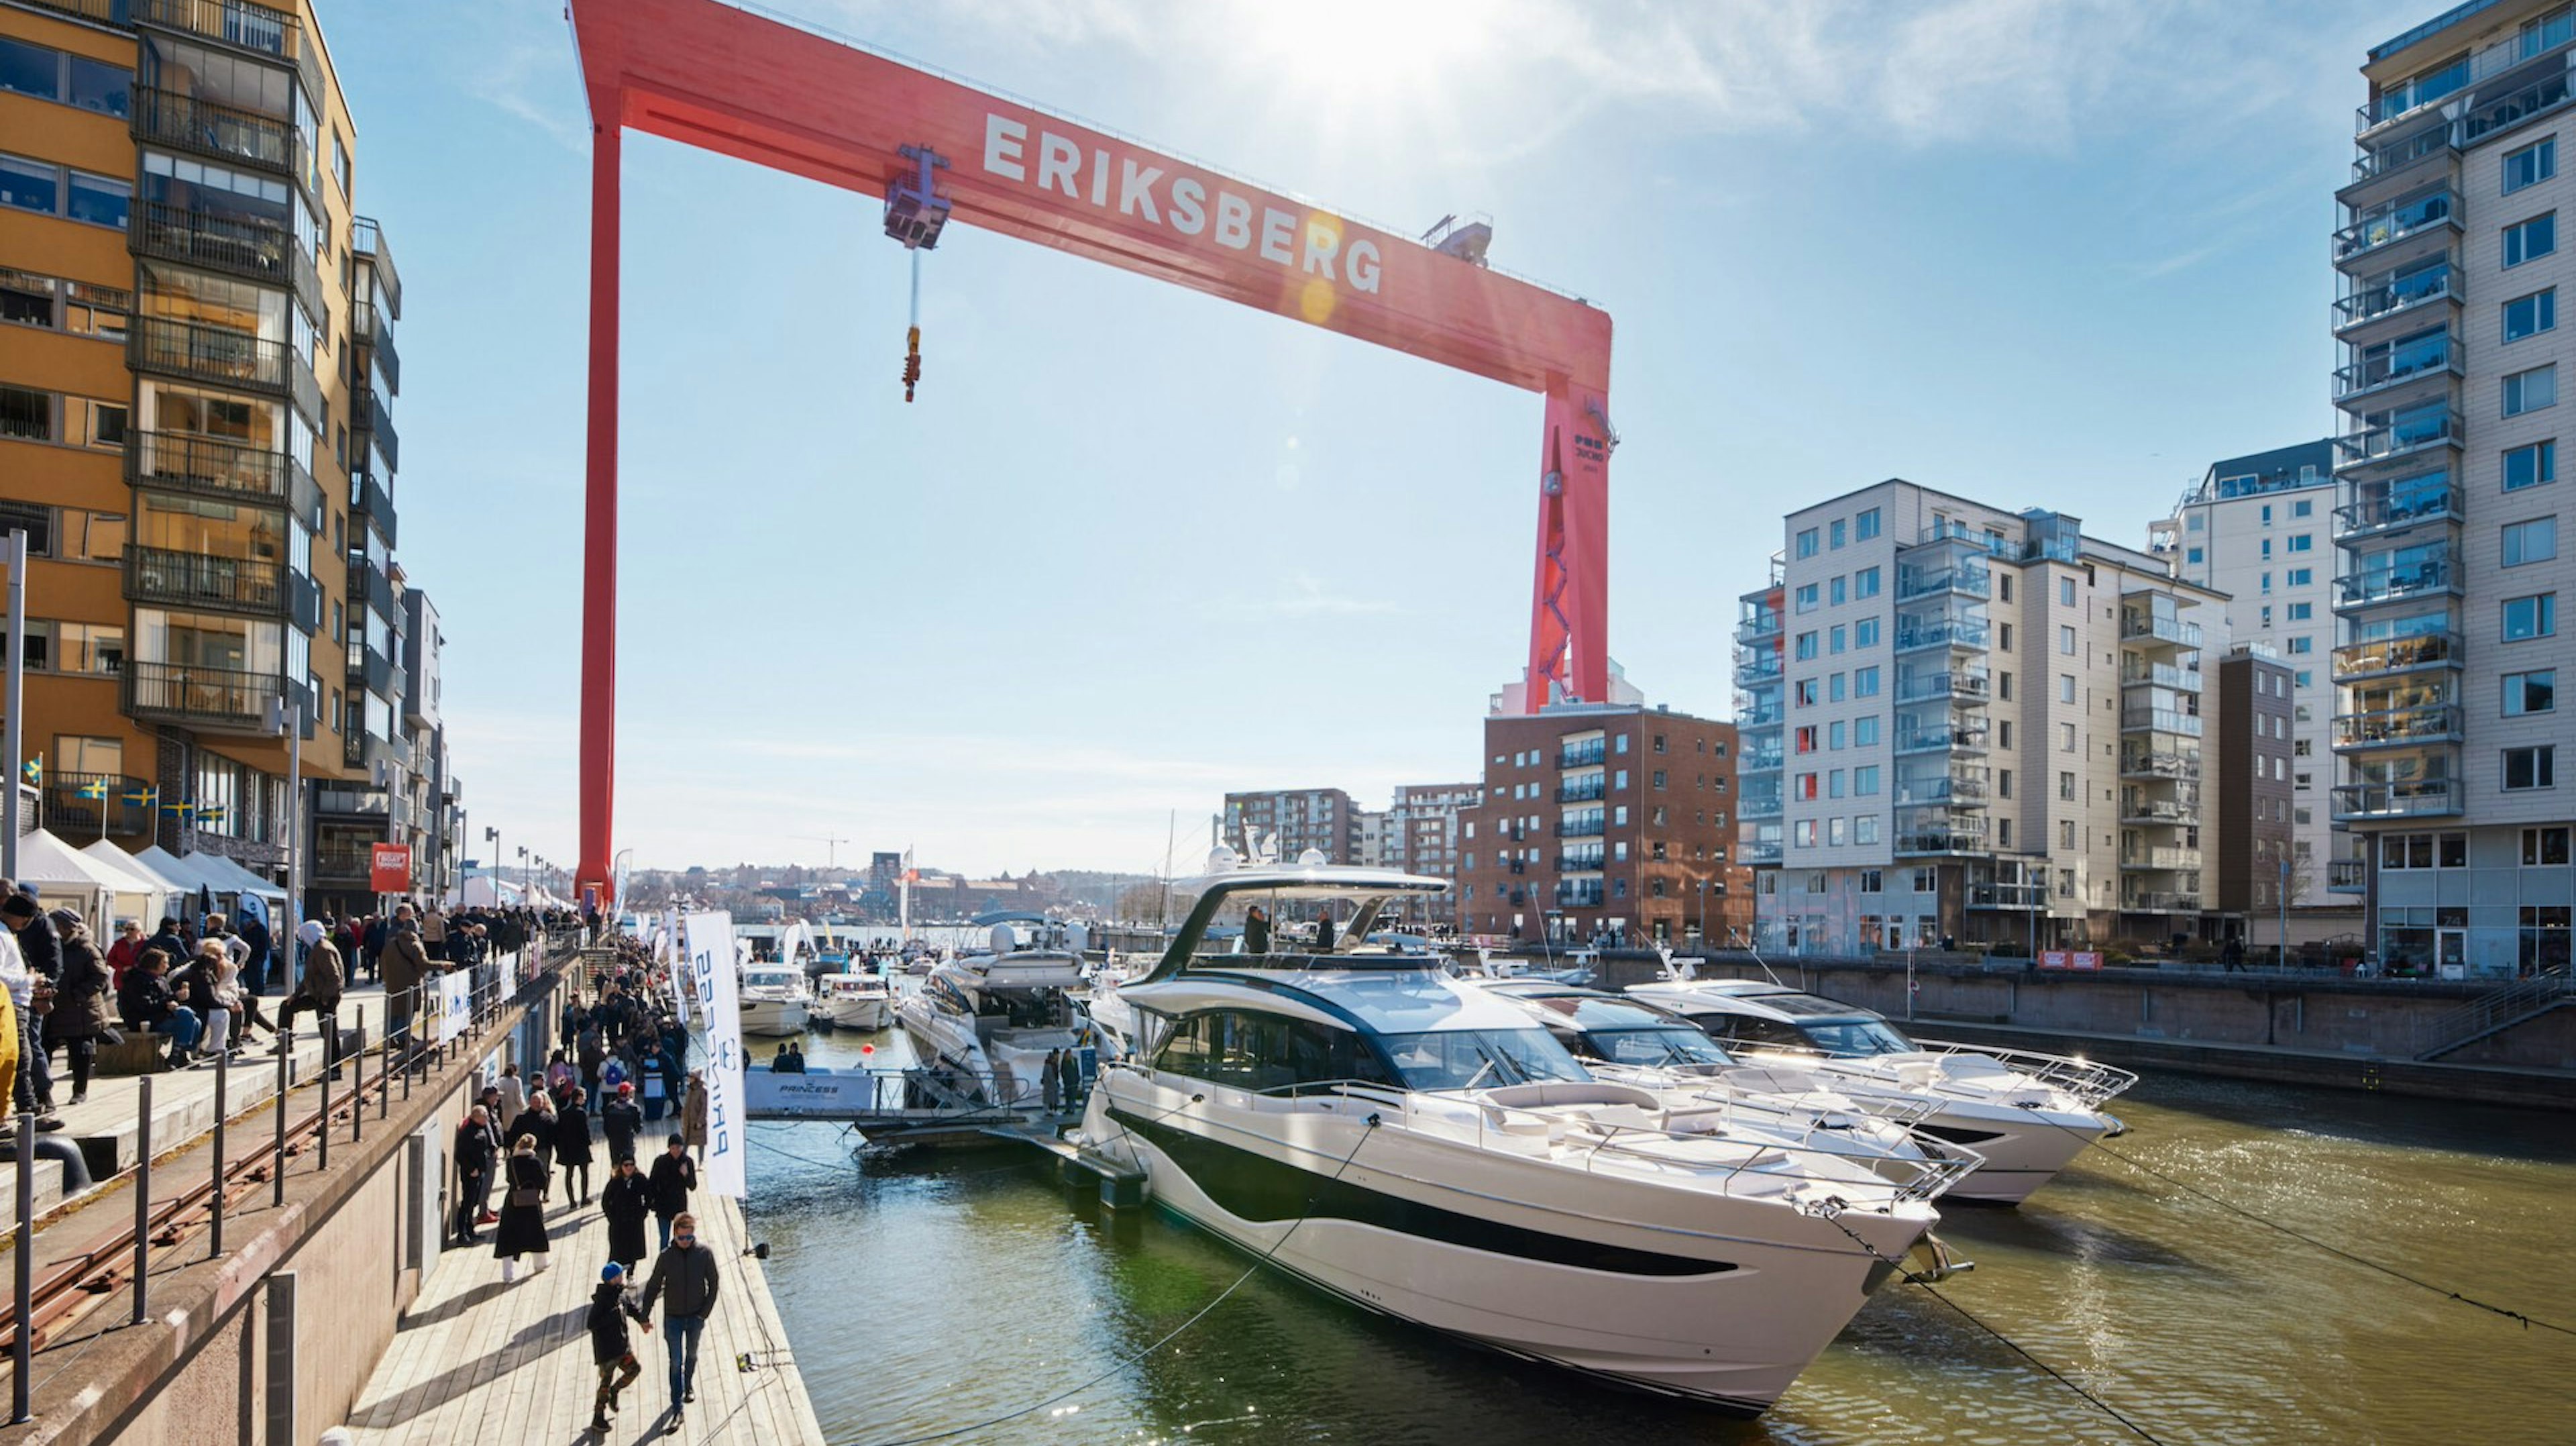 Eriksberg-boat-show